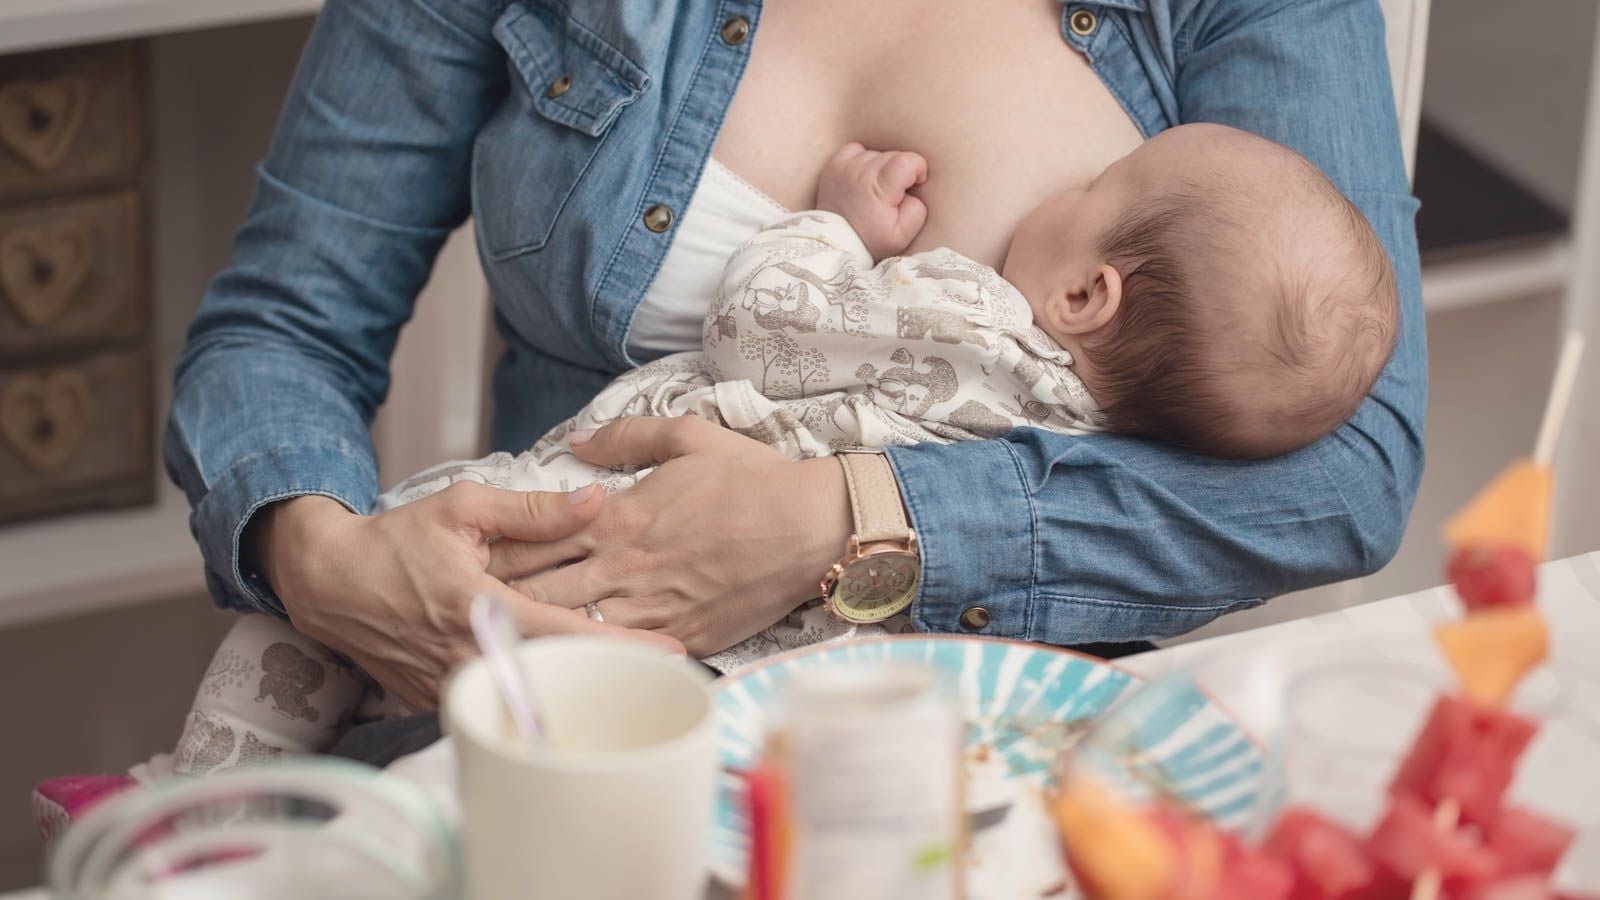 woman breastfeeding at dinner table